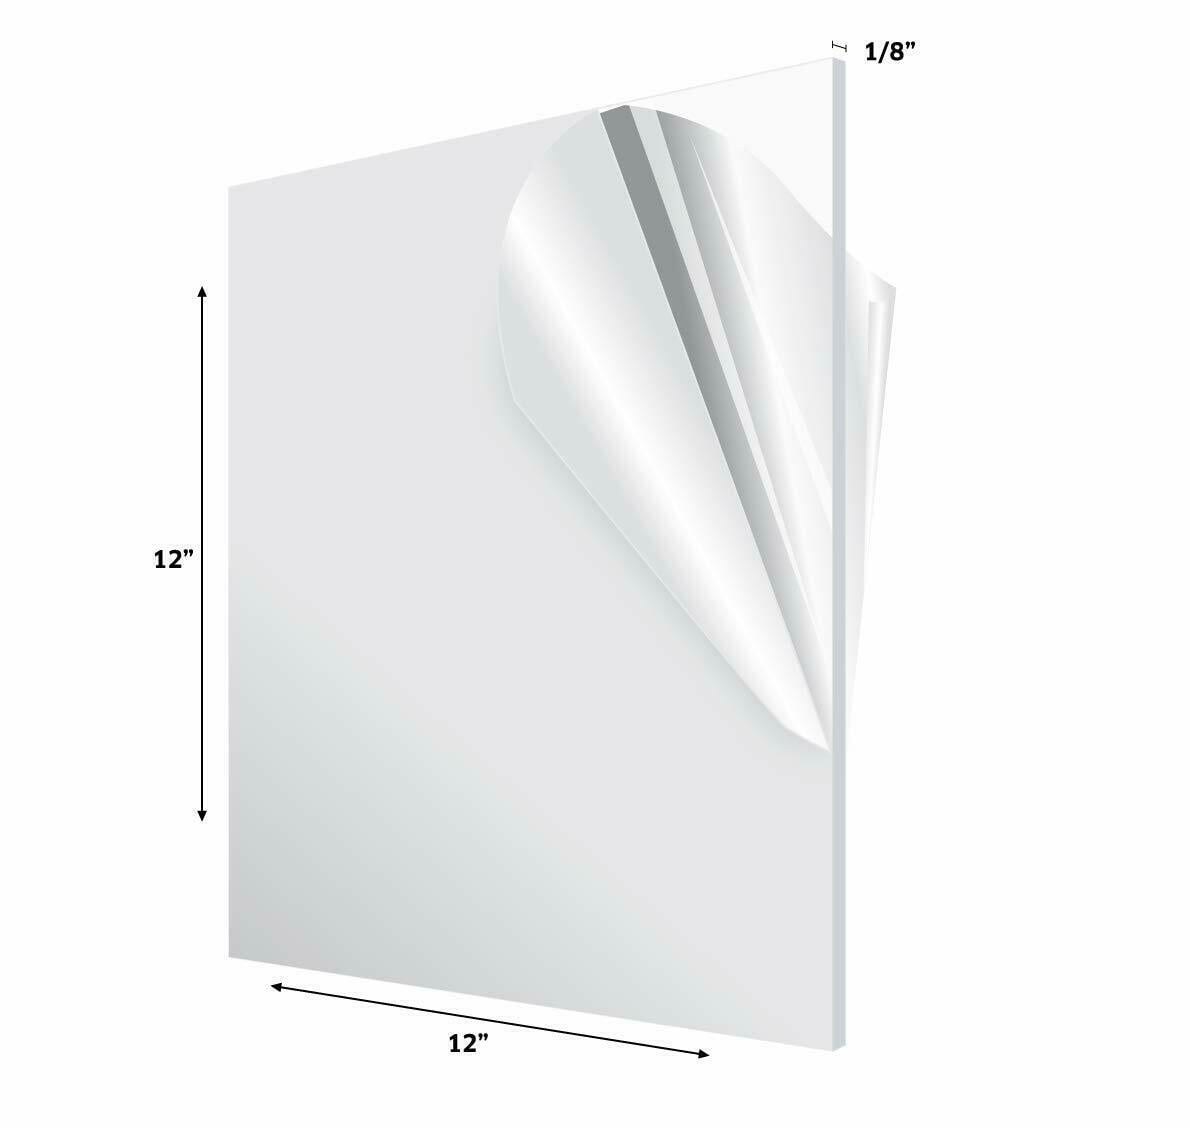 Transparent Blue 12x12/" Acrylic Plexiglass Sheet AZM Displays 12mm SALE 1//2/"